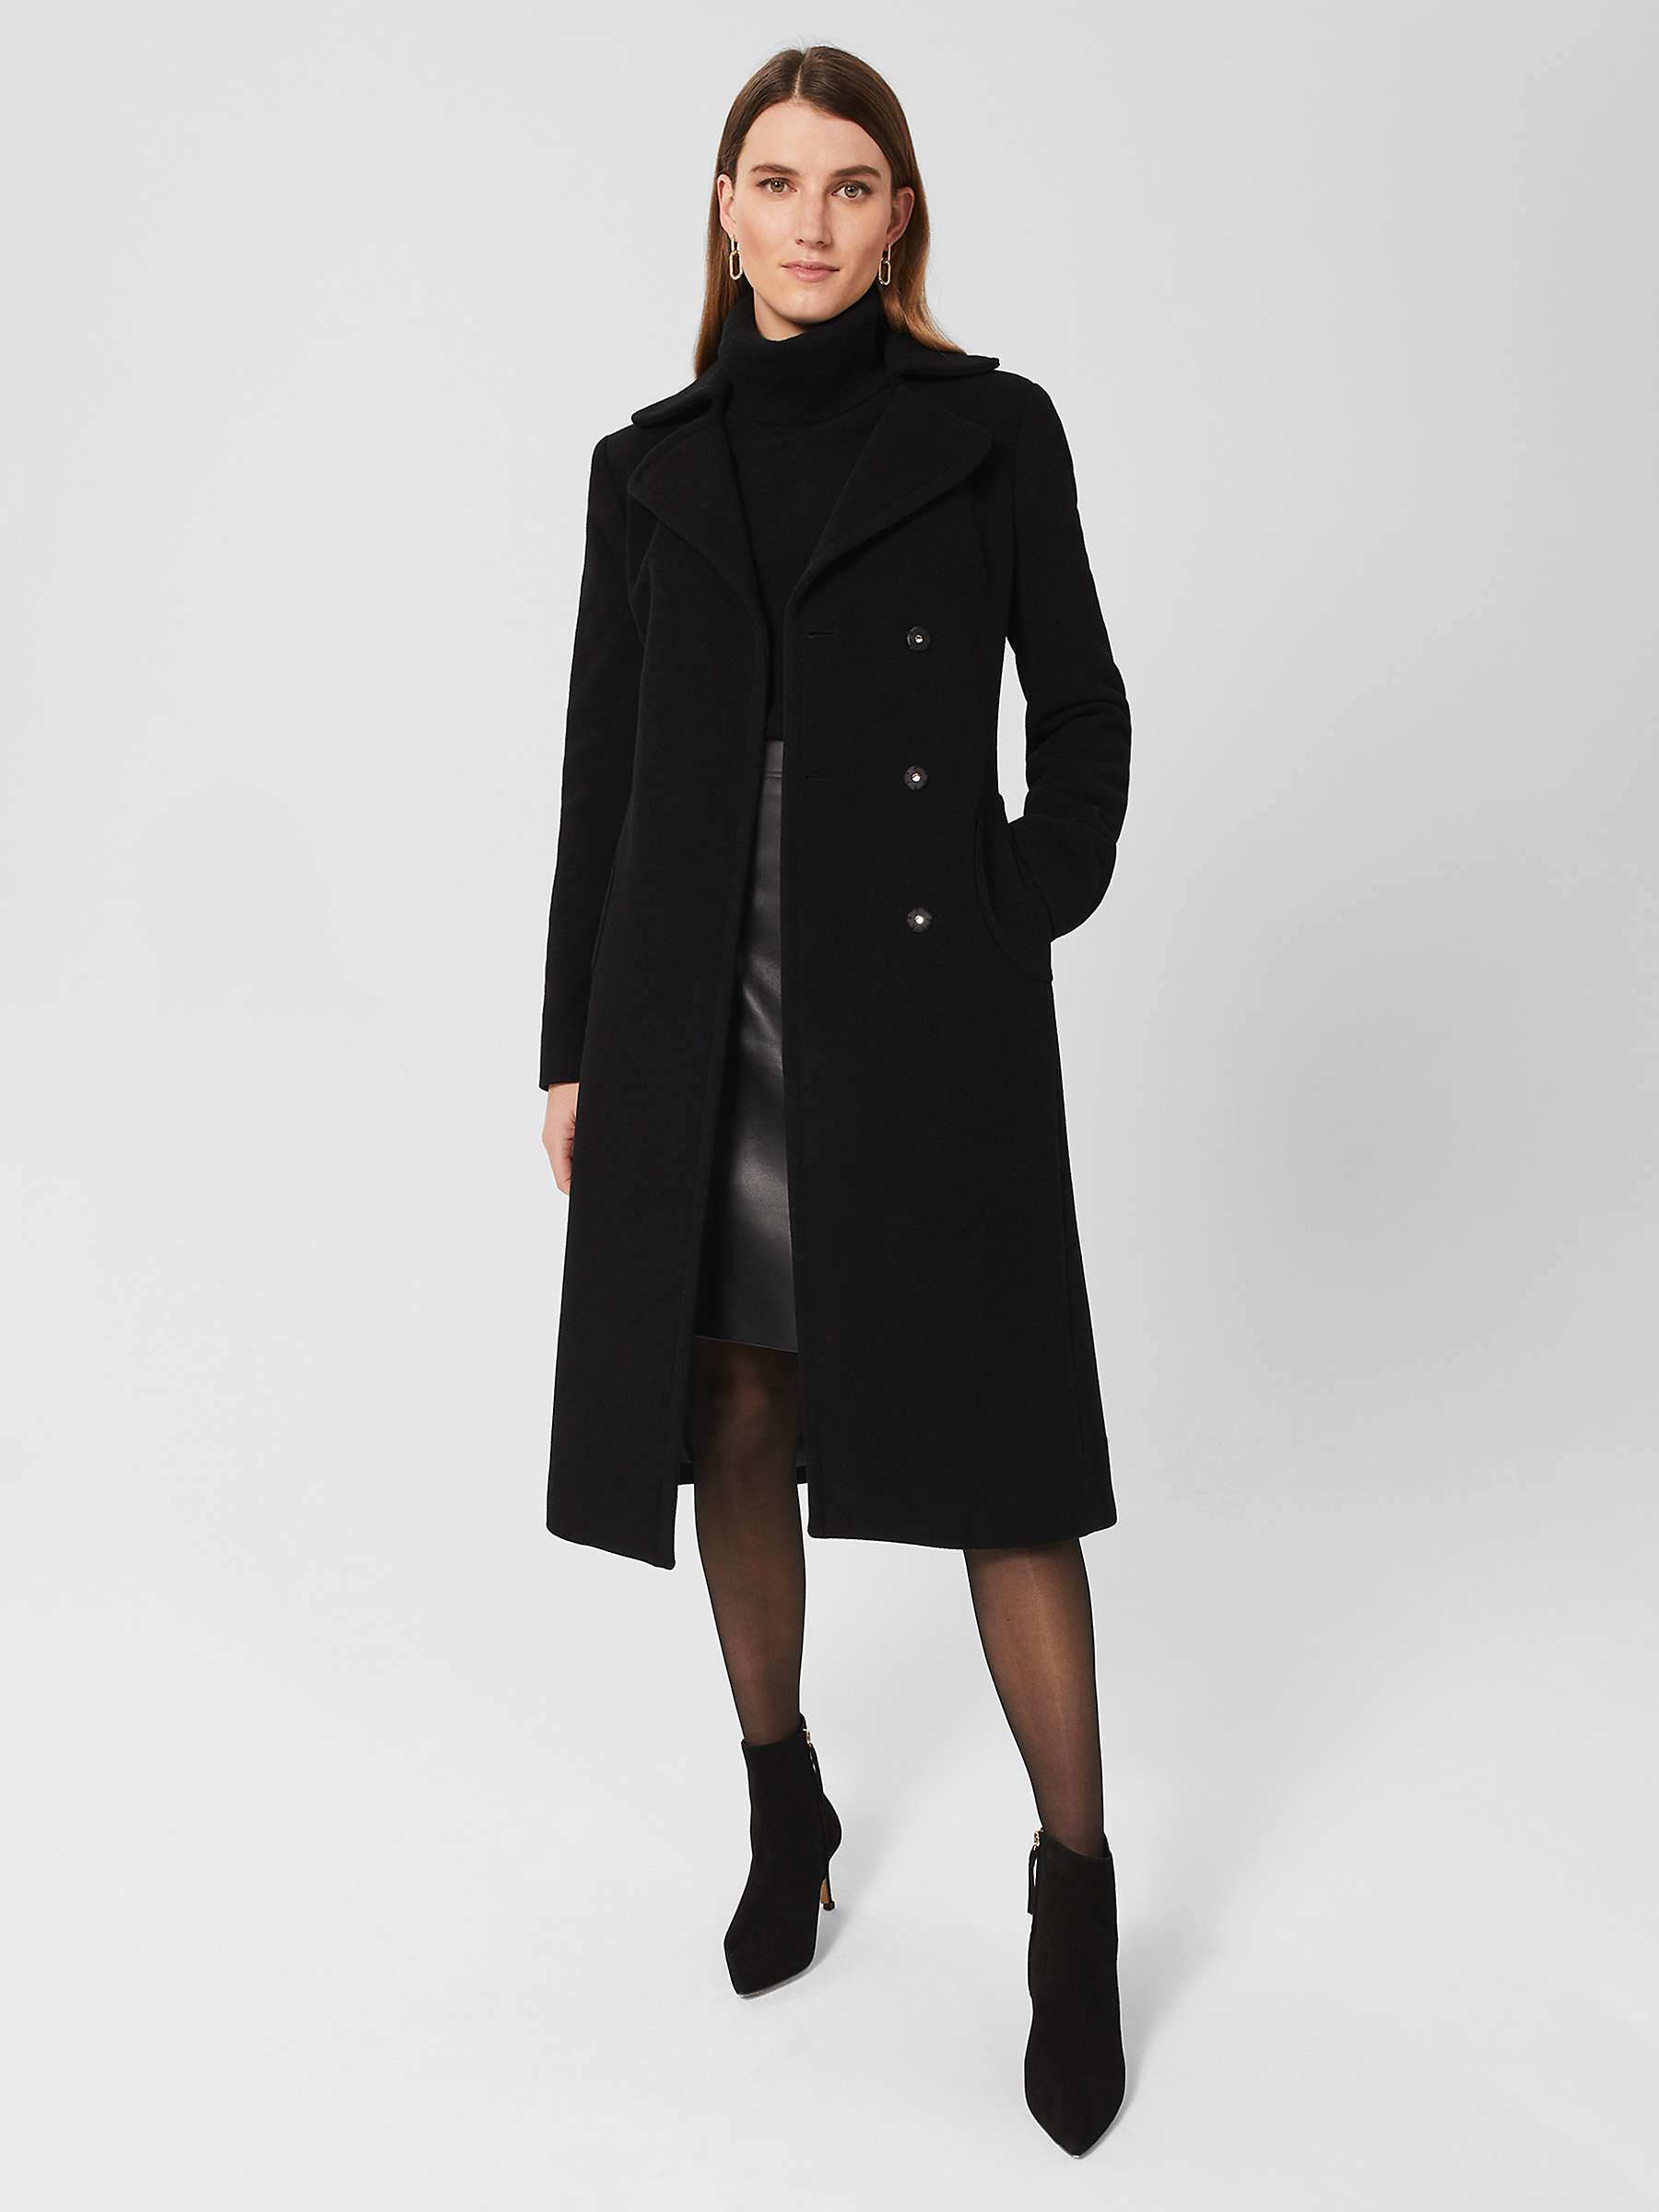 Hobbs Carissa Cashmere Blend Coat, Black at John Lewis & Partners